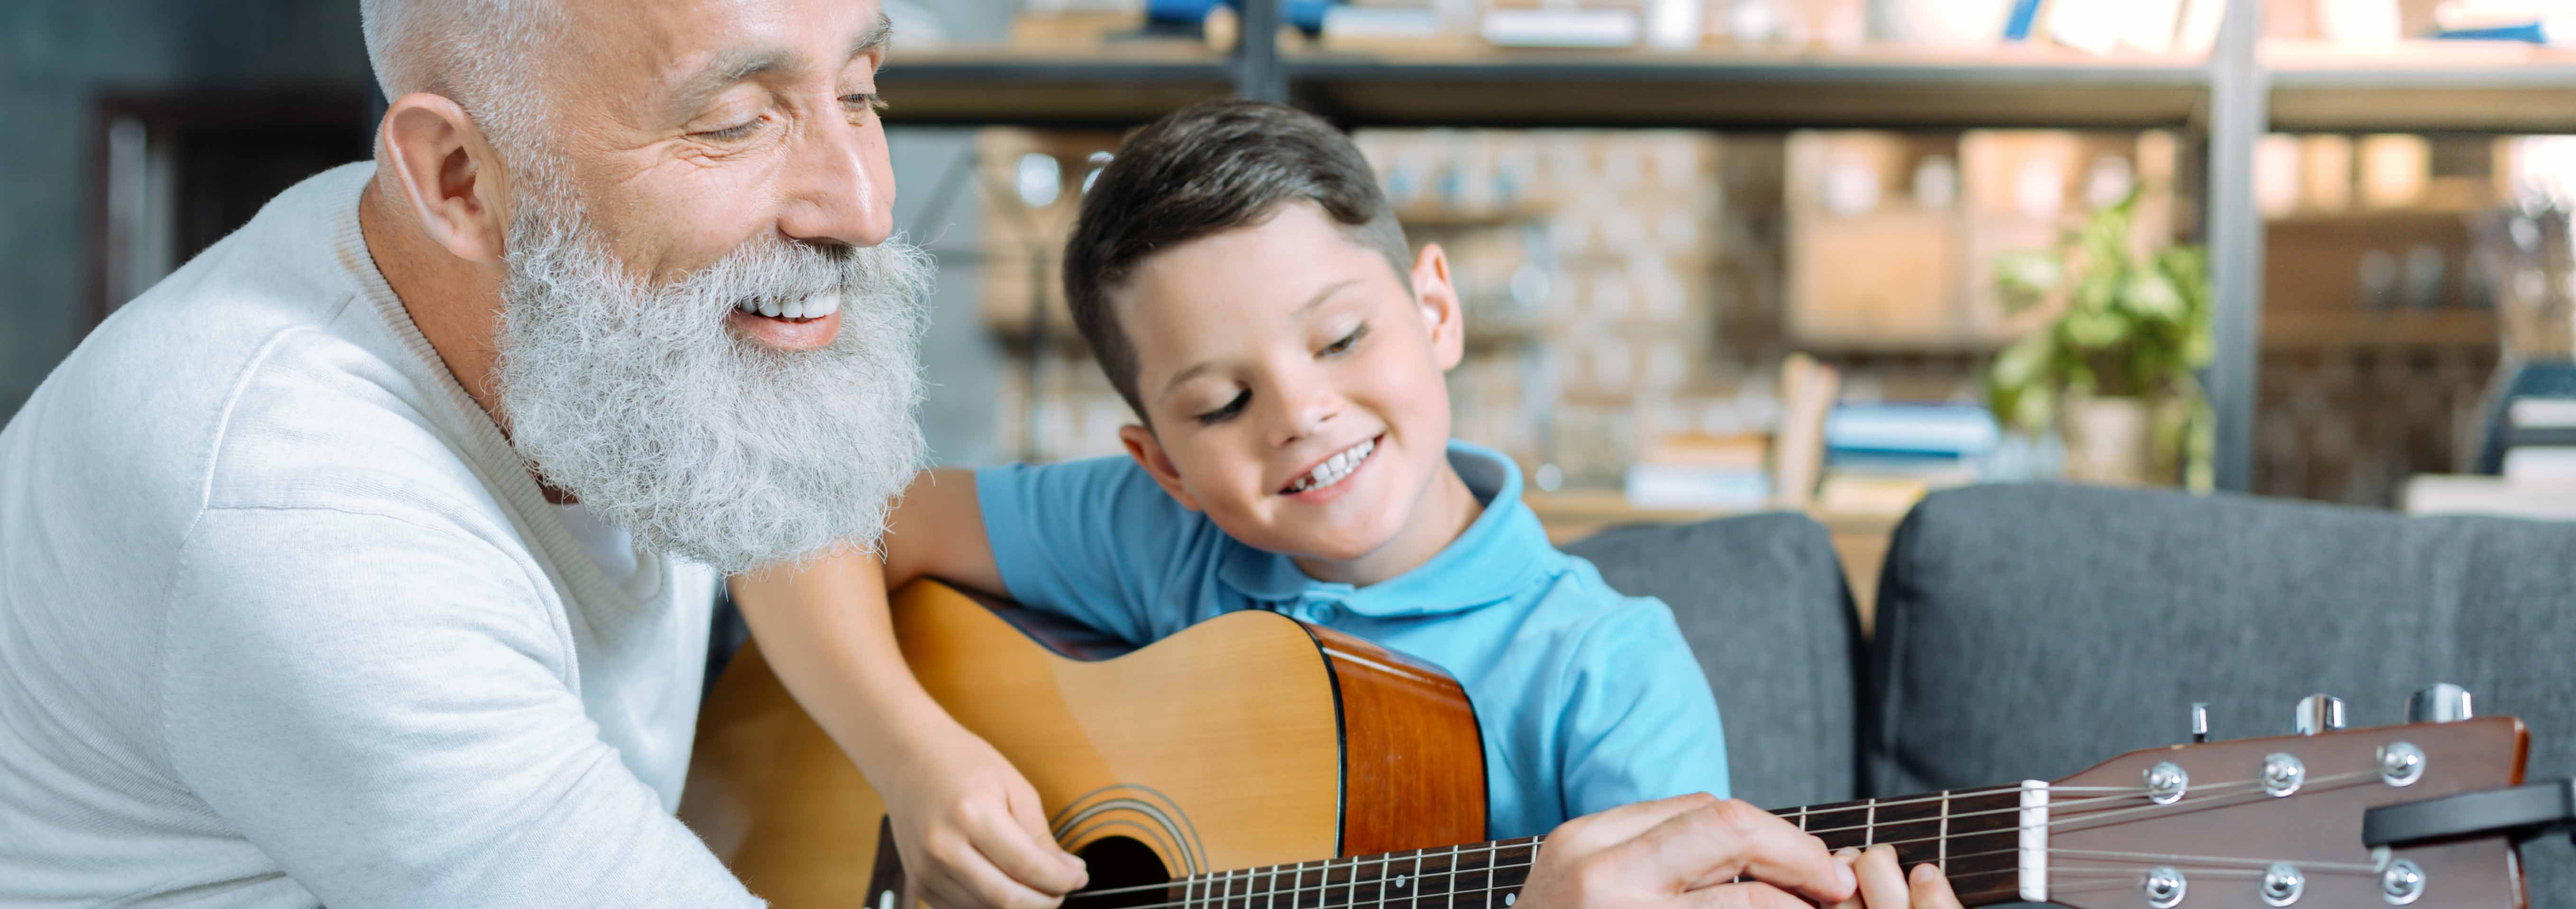 A grandad teaching his grandson how to play guitar